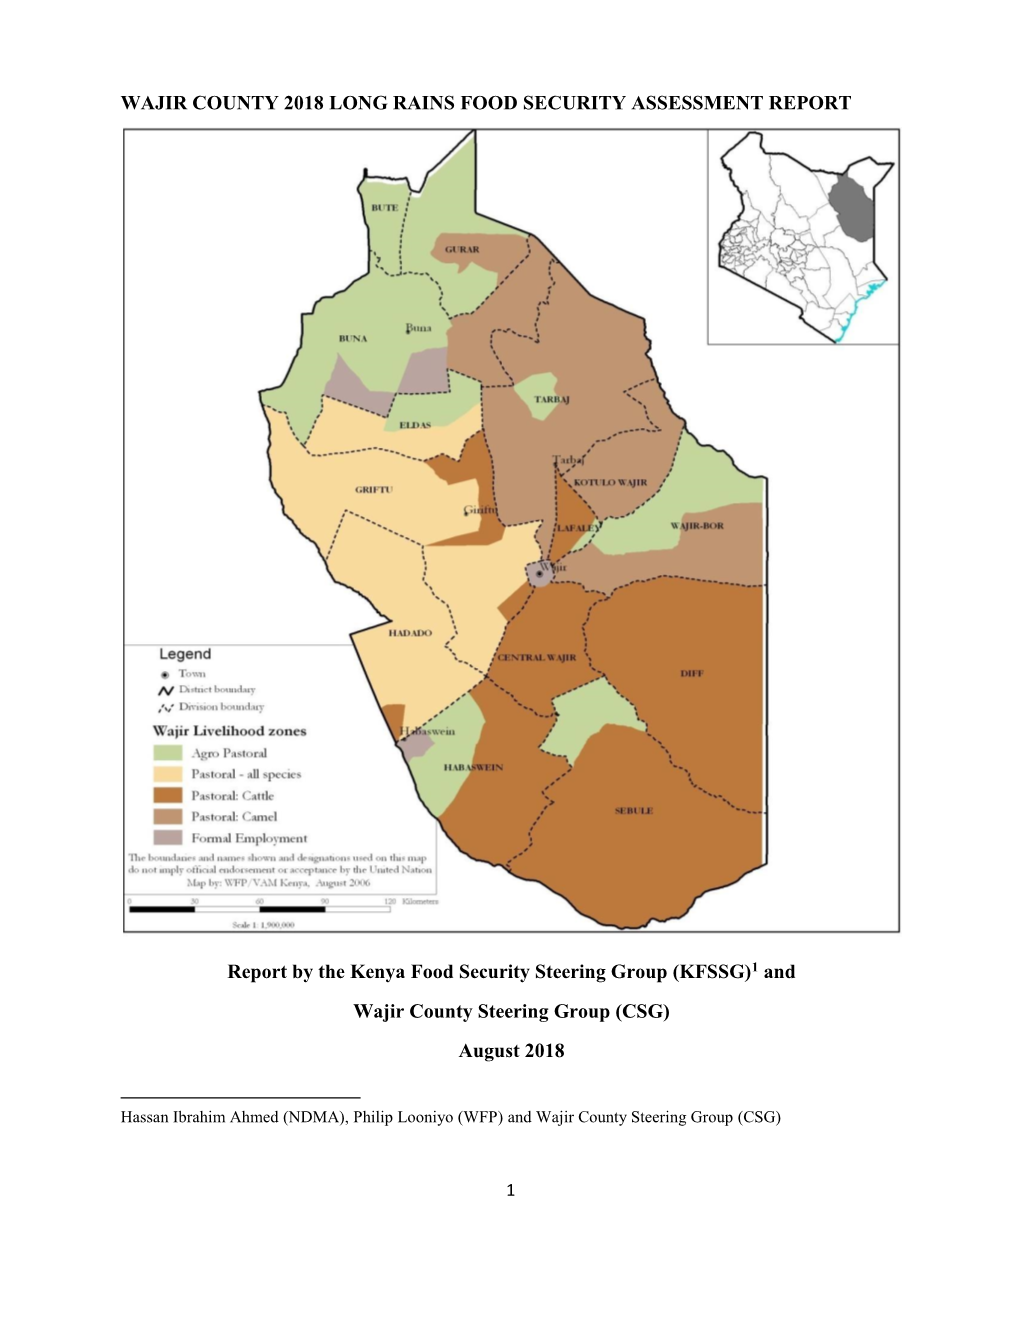 Wajir County 2018 Long Rains Food Security Assessment Report